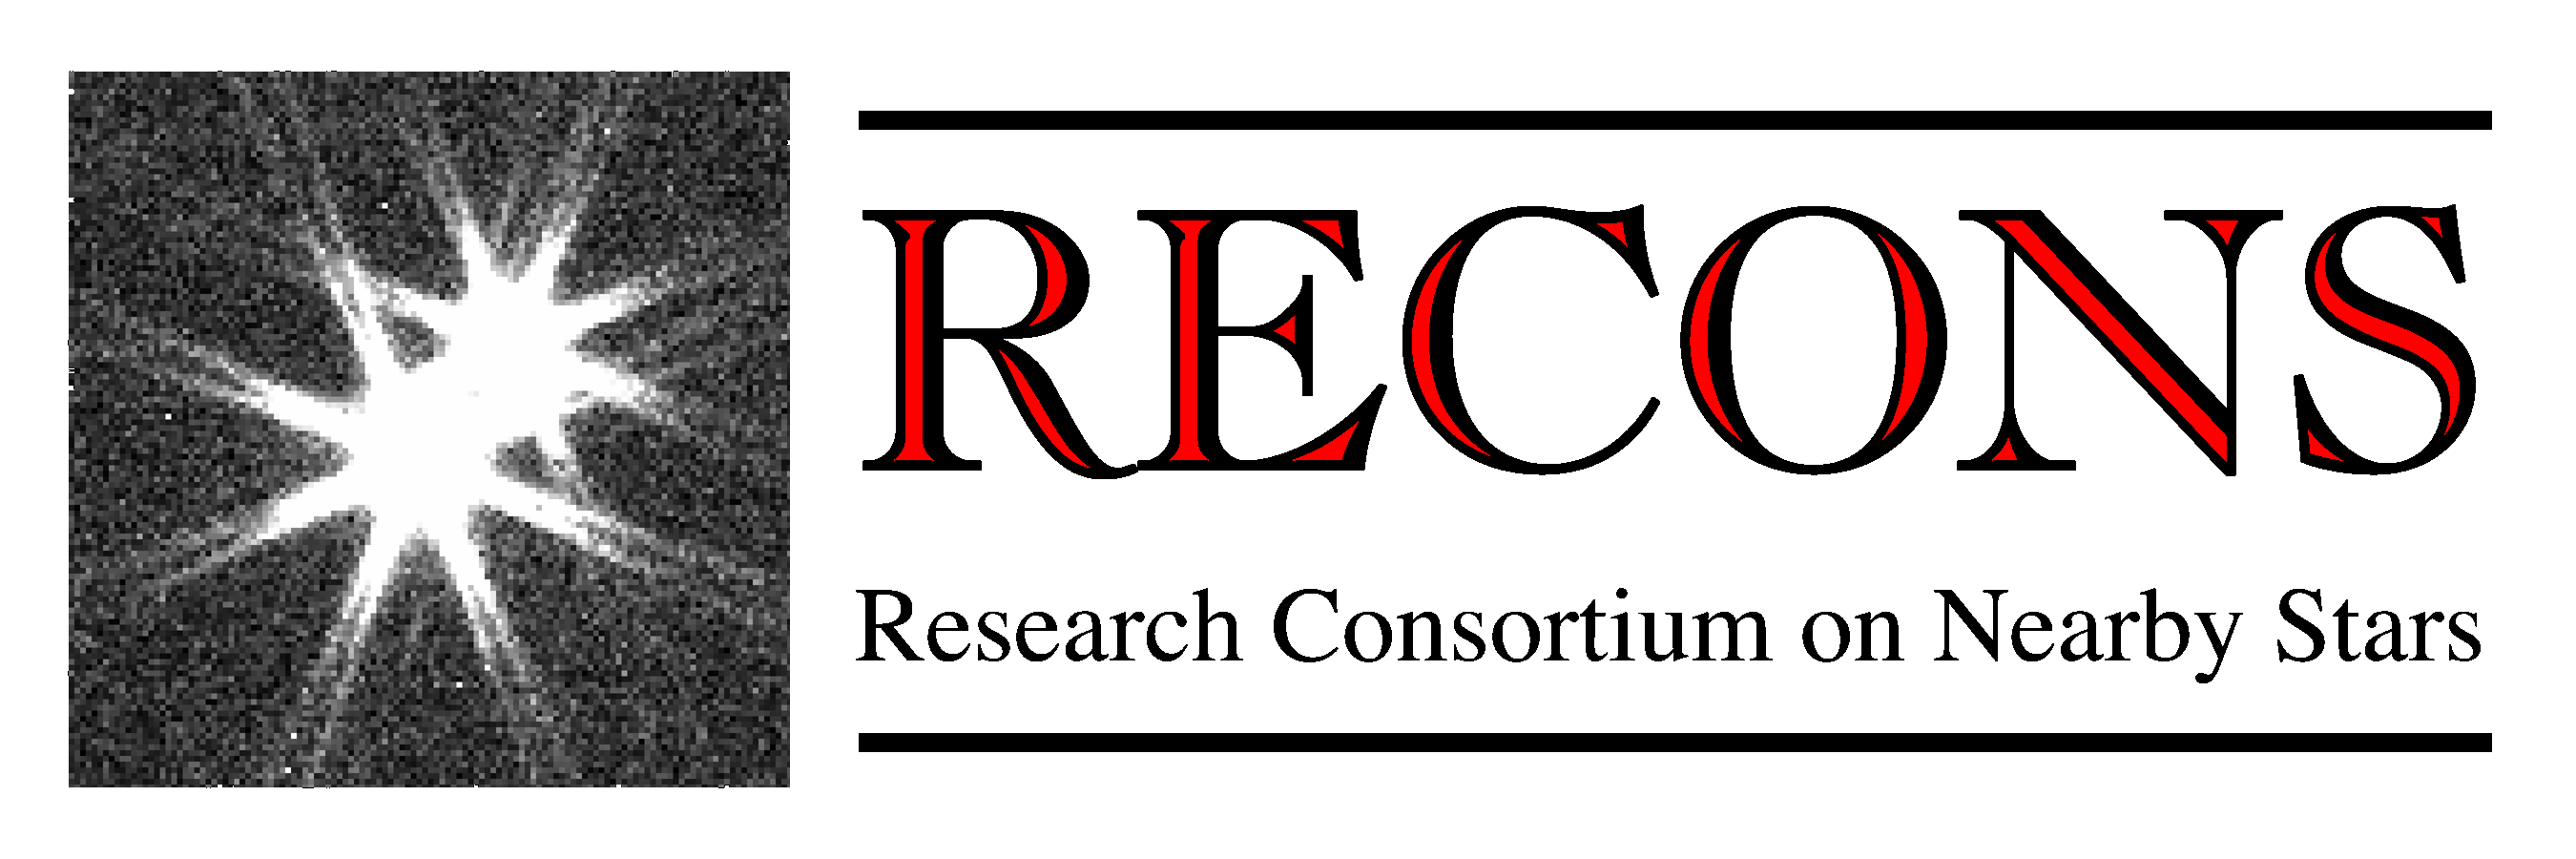 RECONS logo